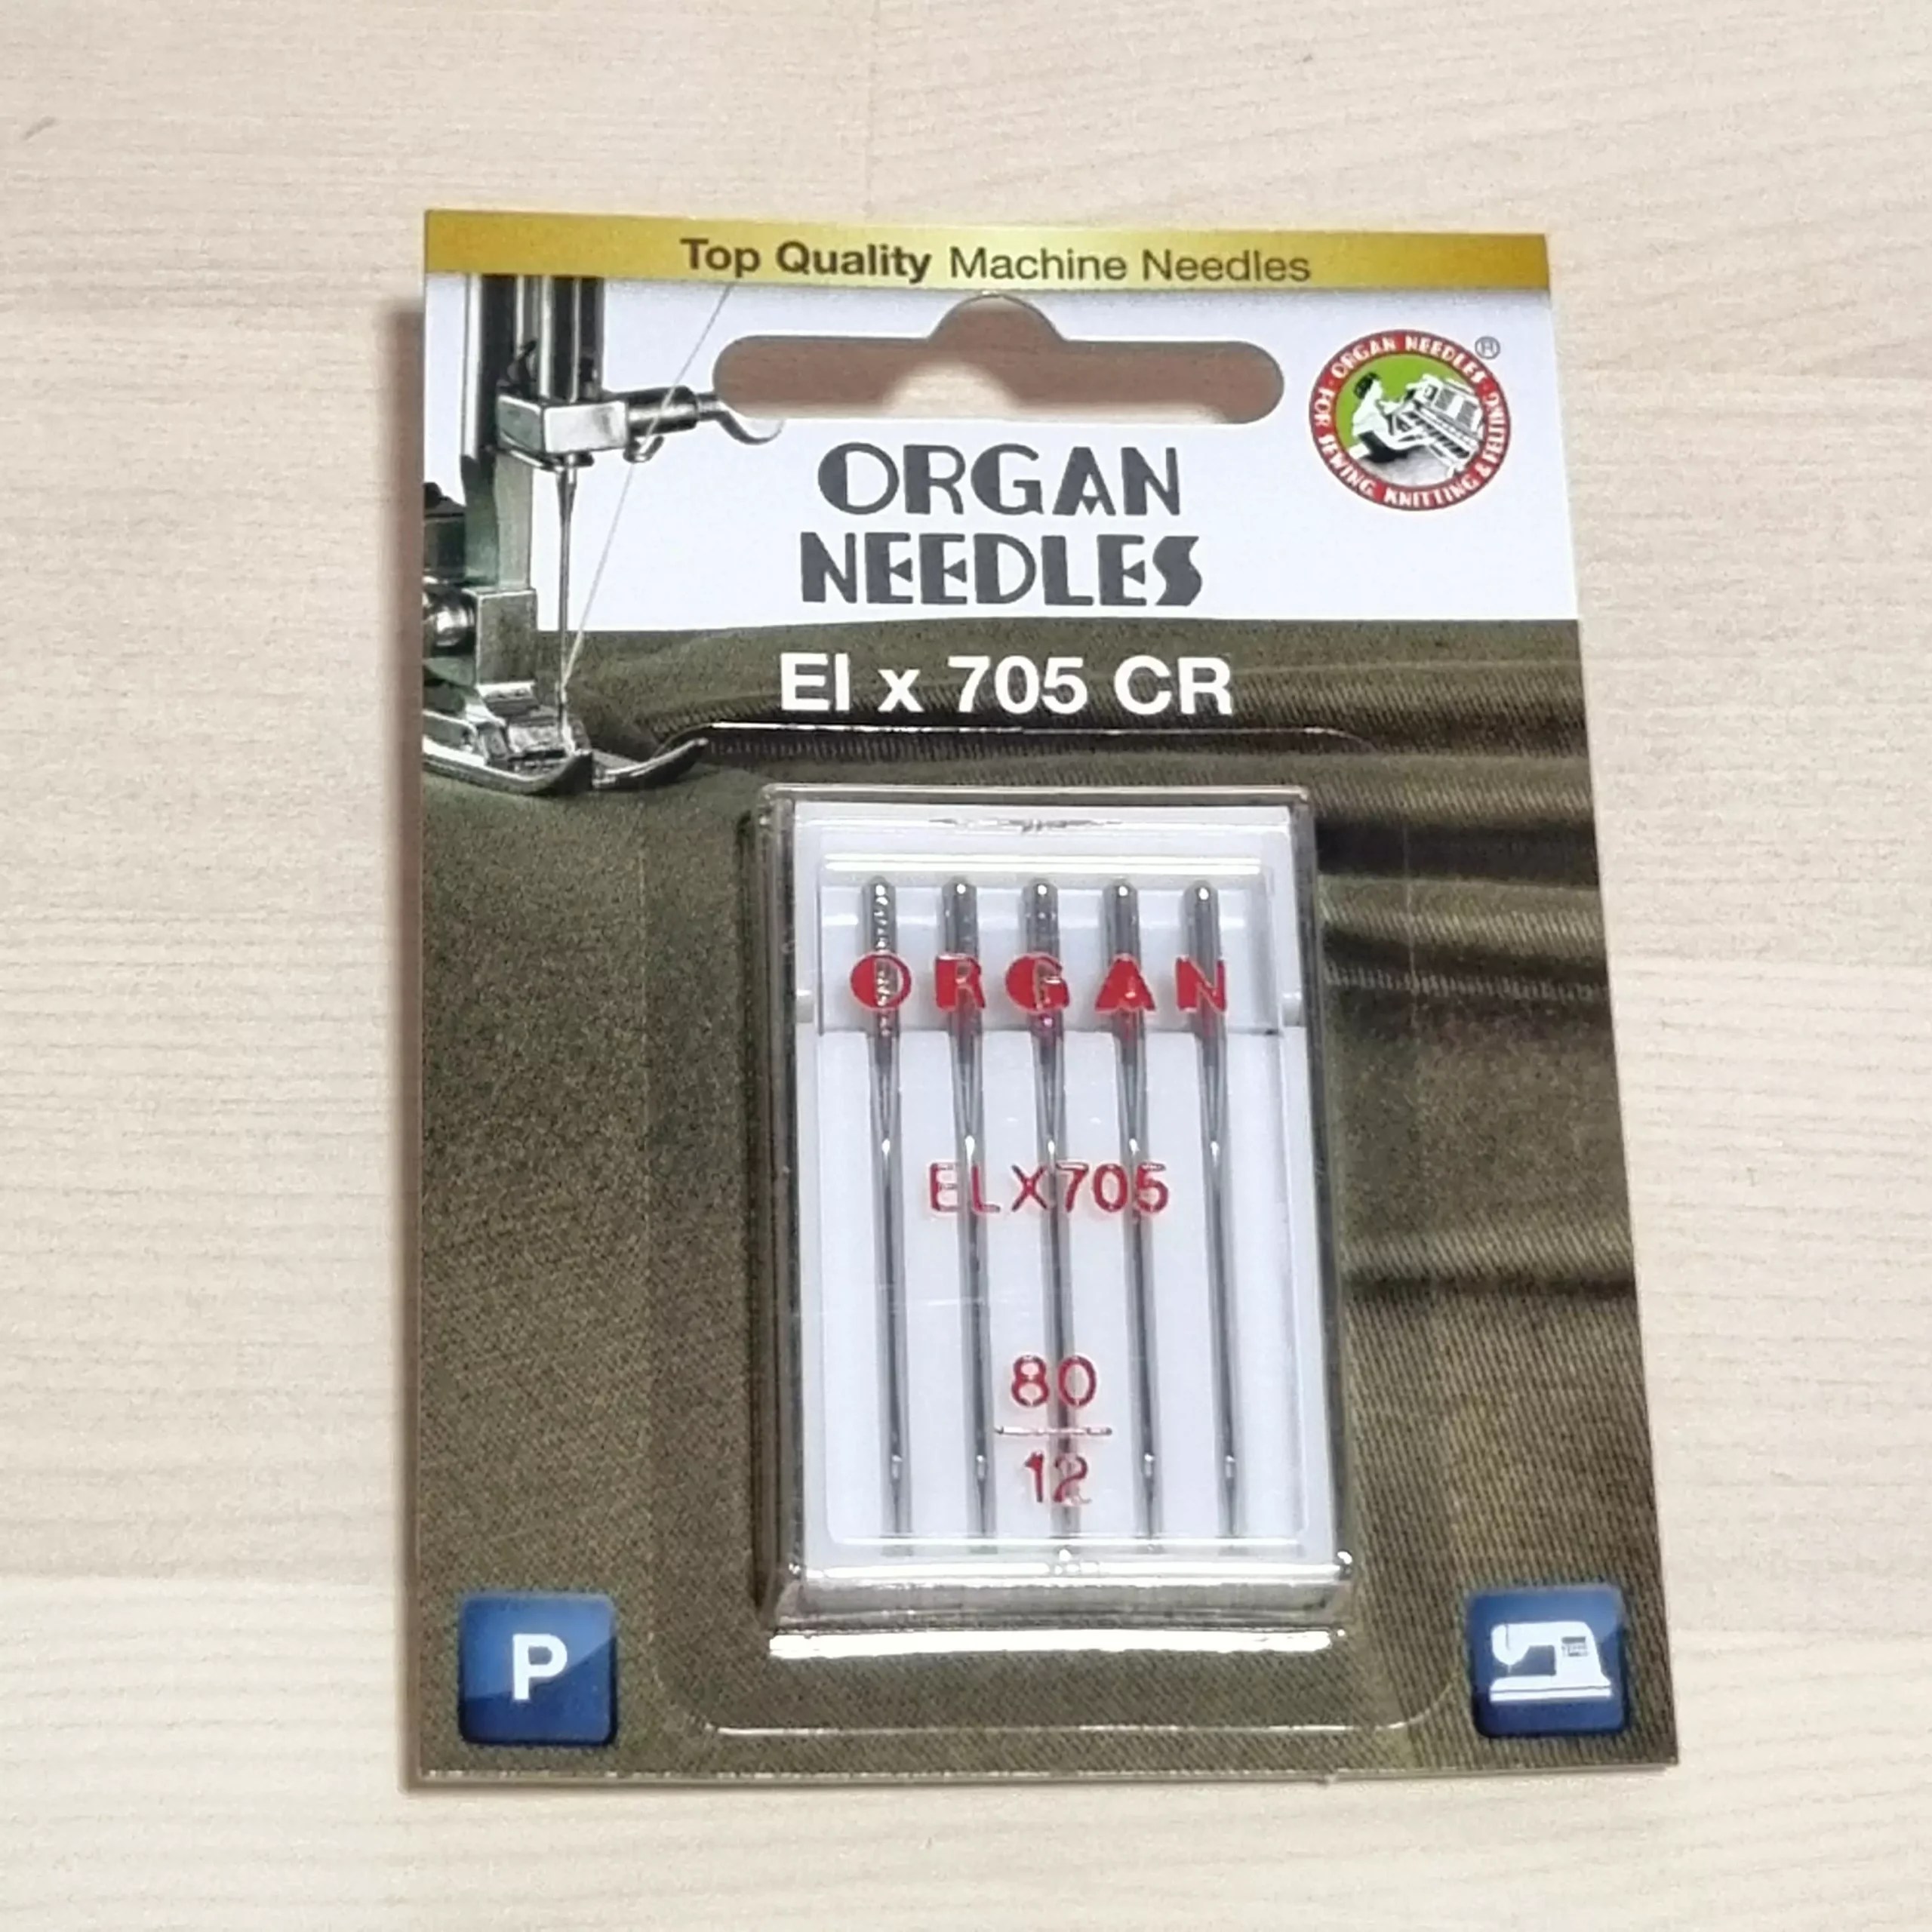 ORGAN Sewing Machine Needles